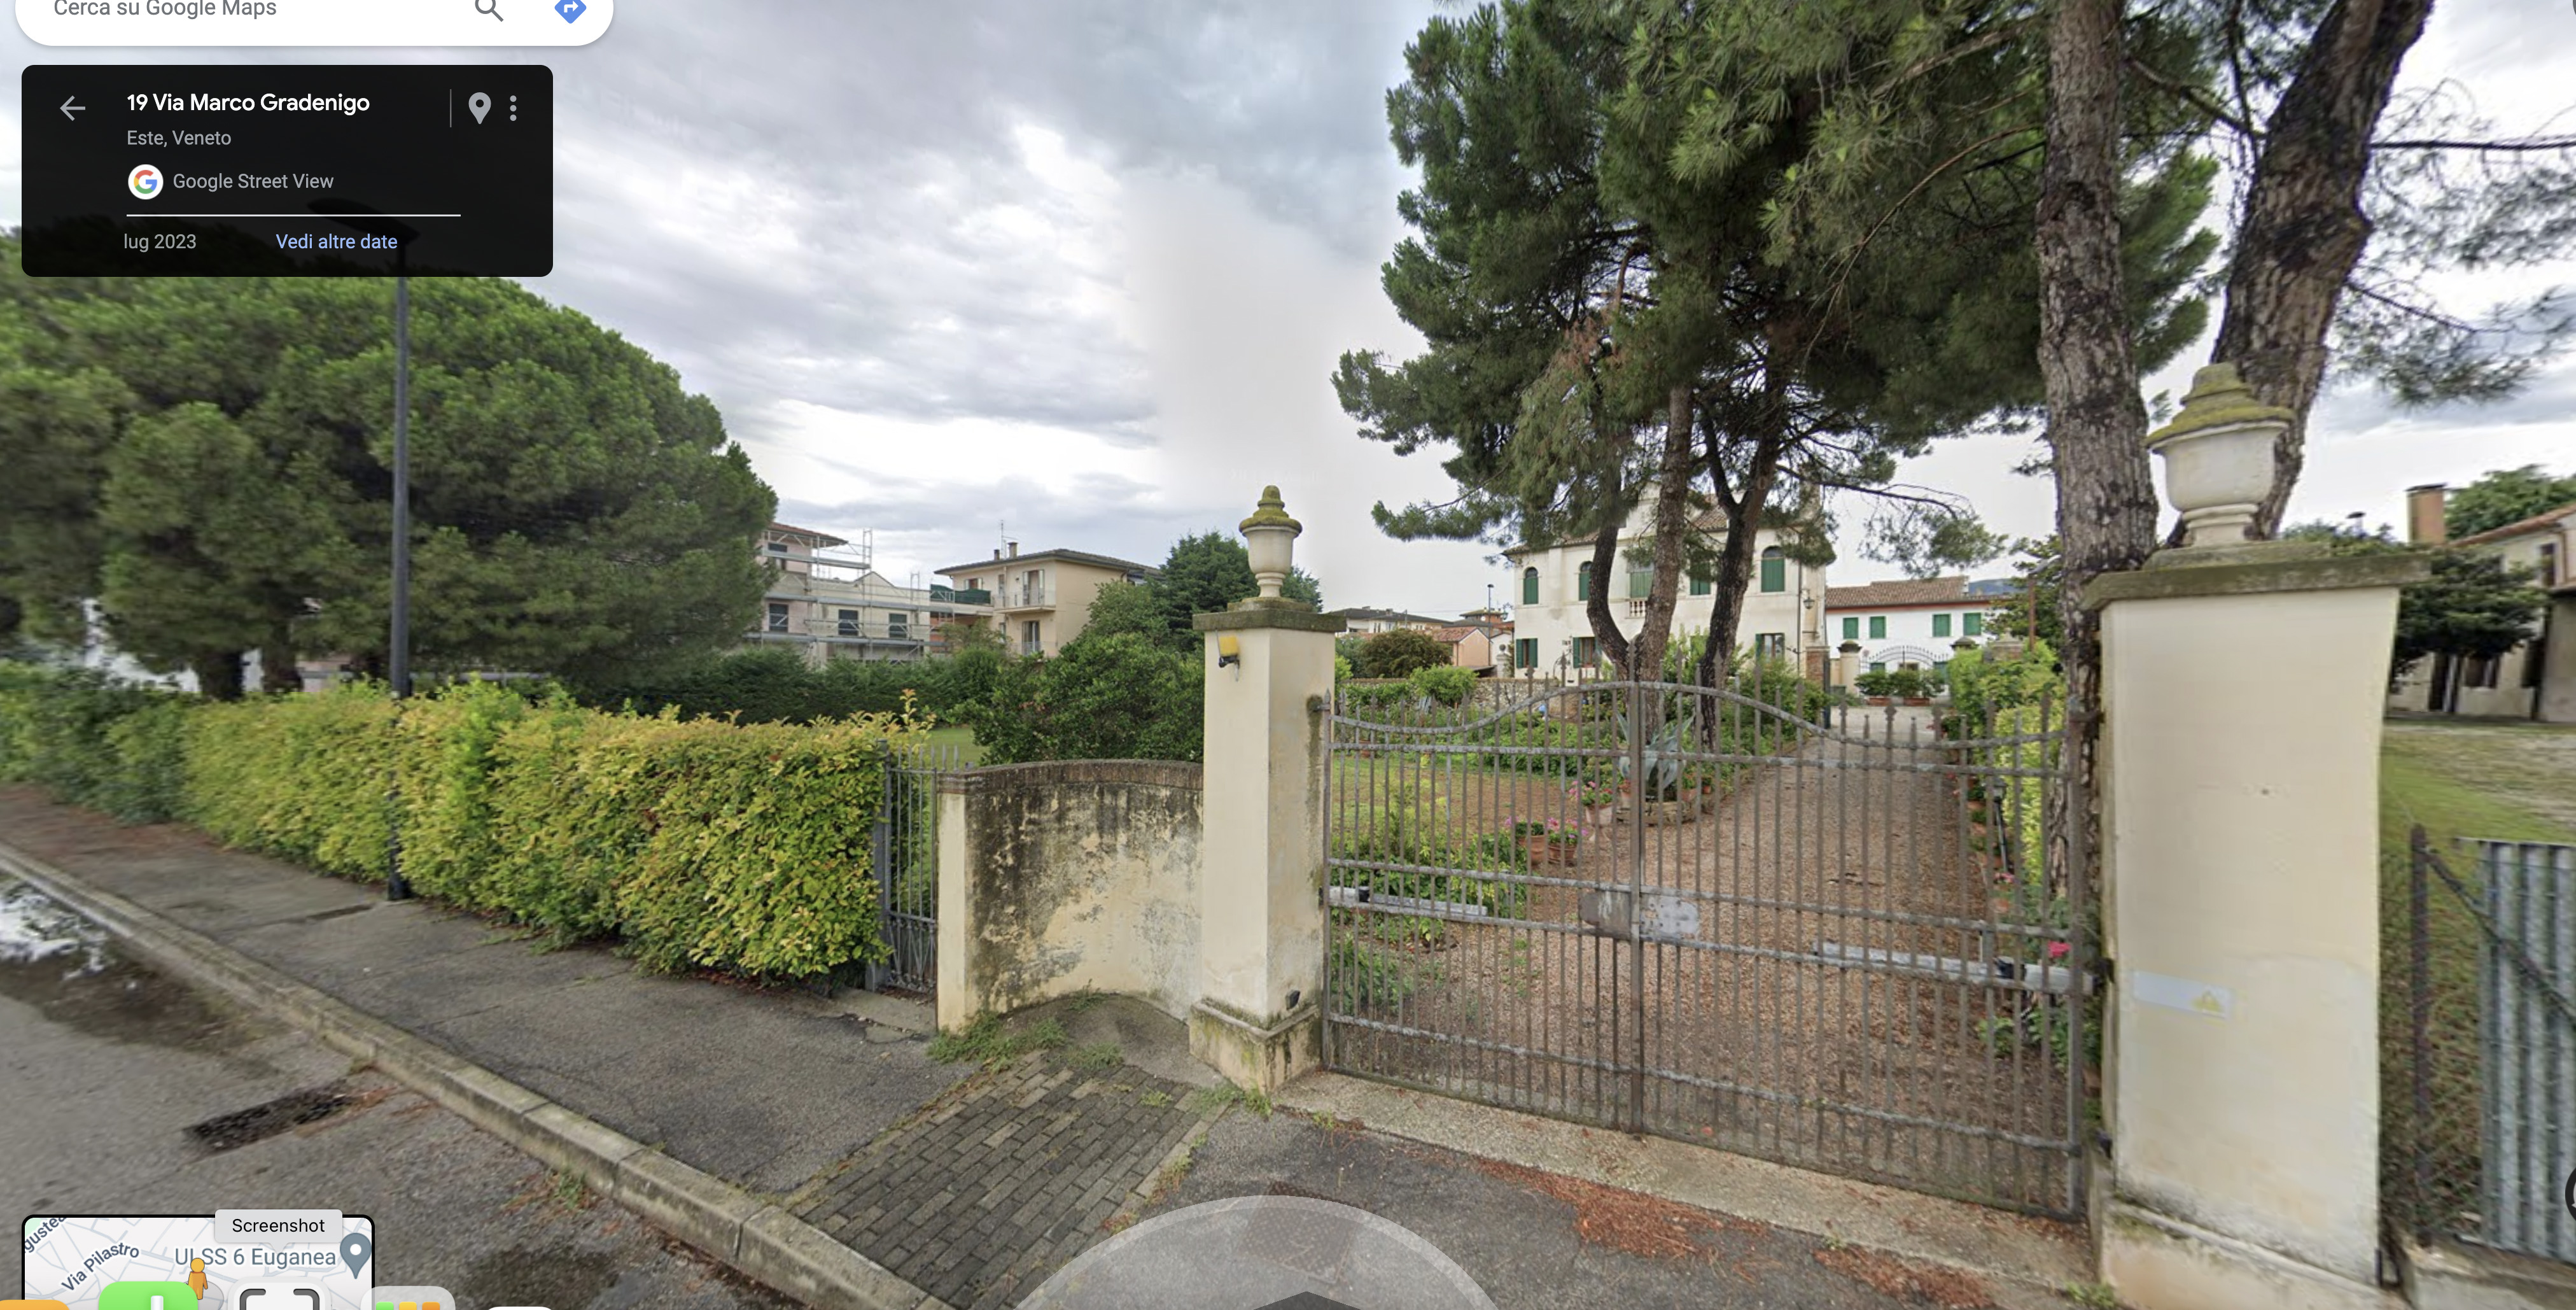 Gradenigo cancello esterno da Google Maps @ Villa Gradenigo Capodaglio Barbiero